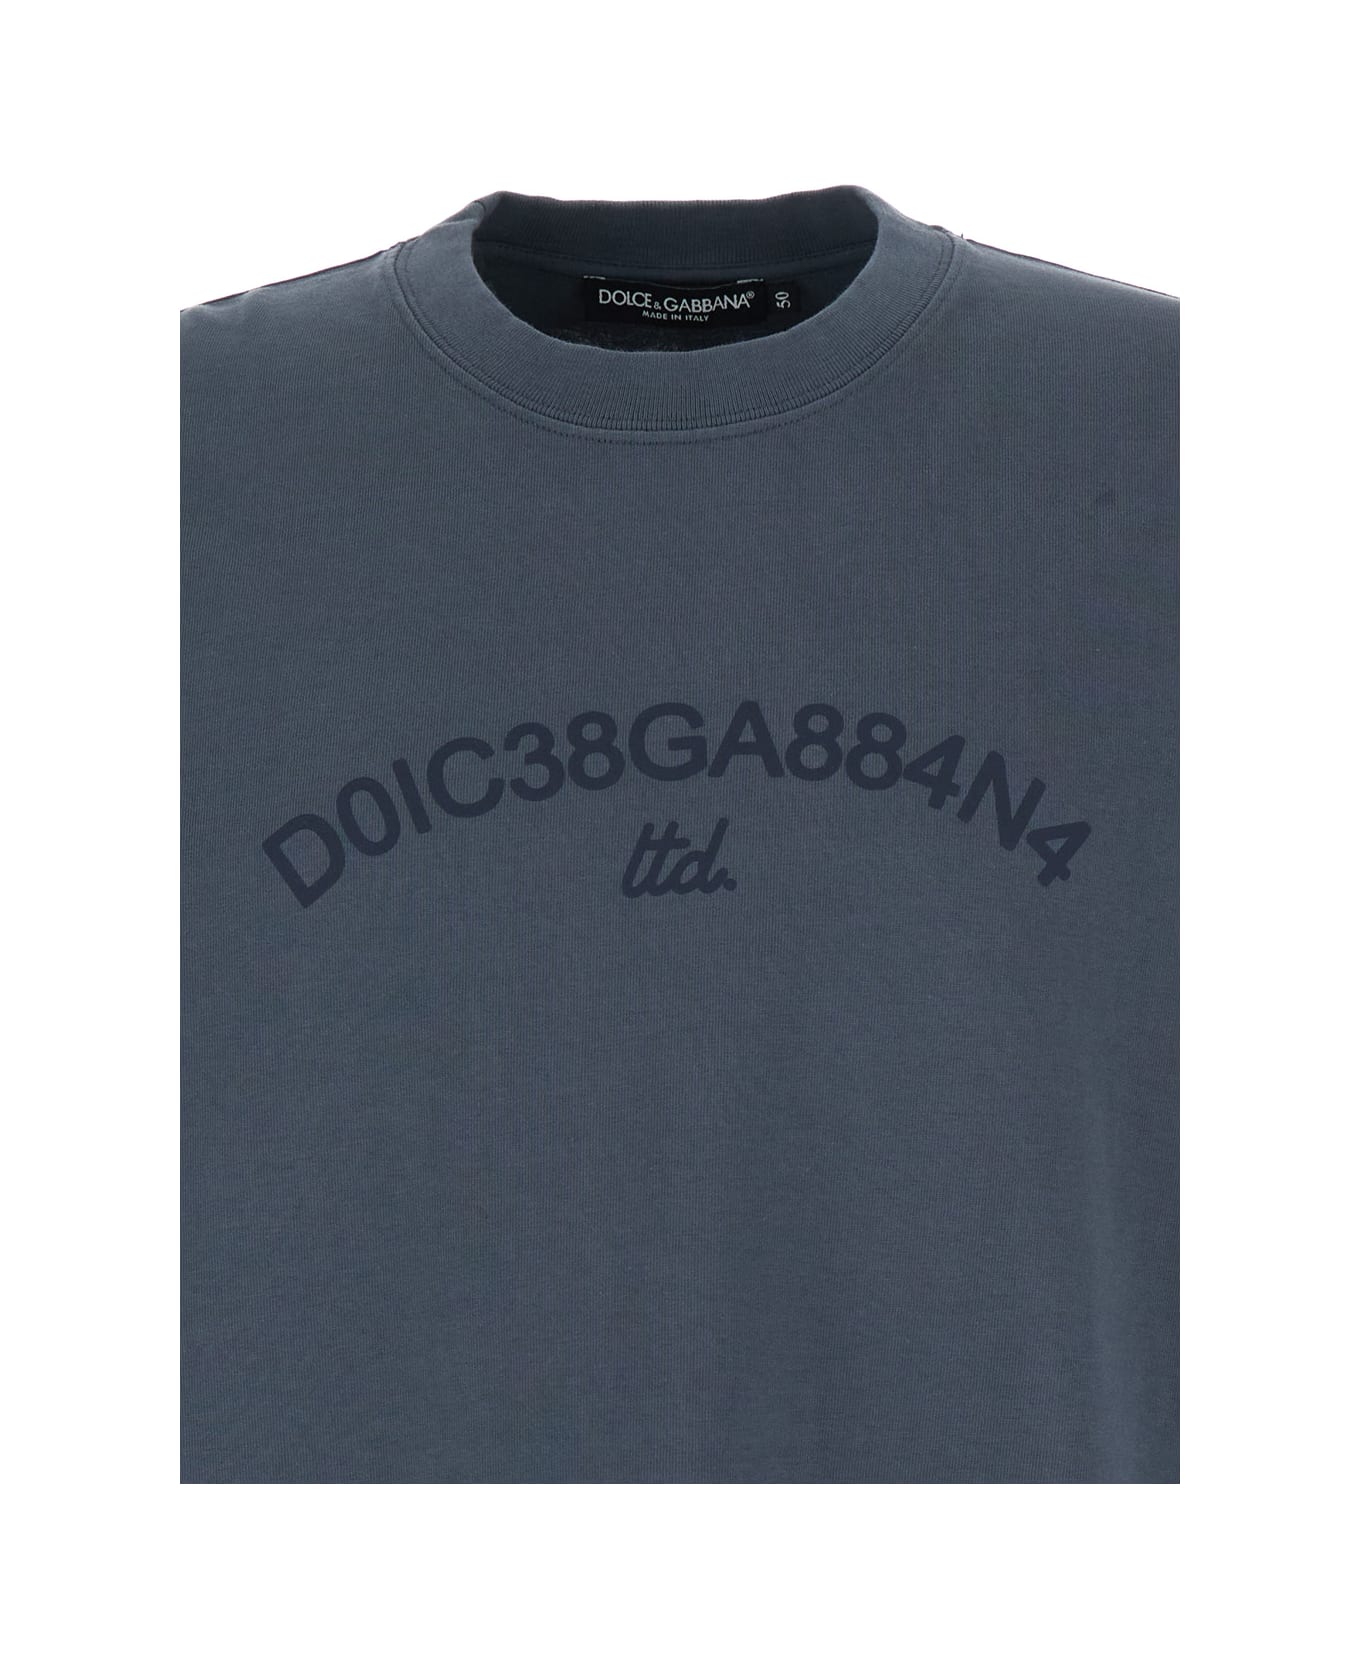 Dolce & Gabbana Grey Crewneck T-shirt With Tonal Logo Embroidery In Cotton Man - Grey